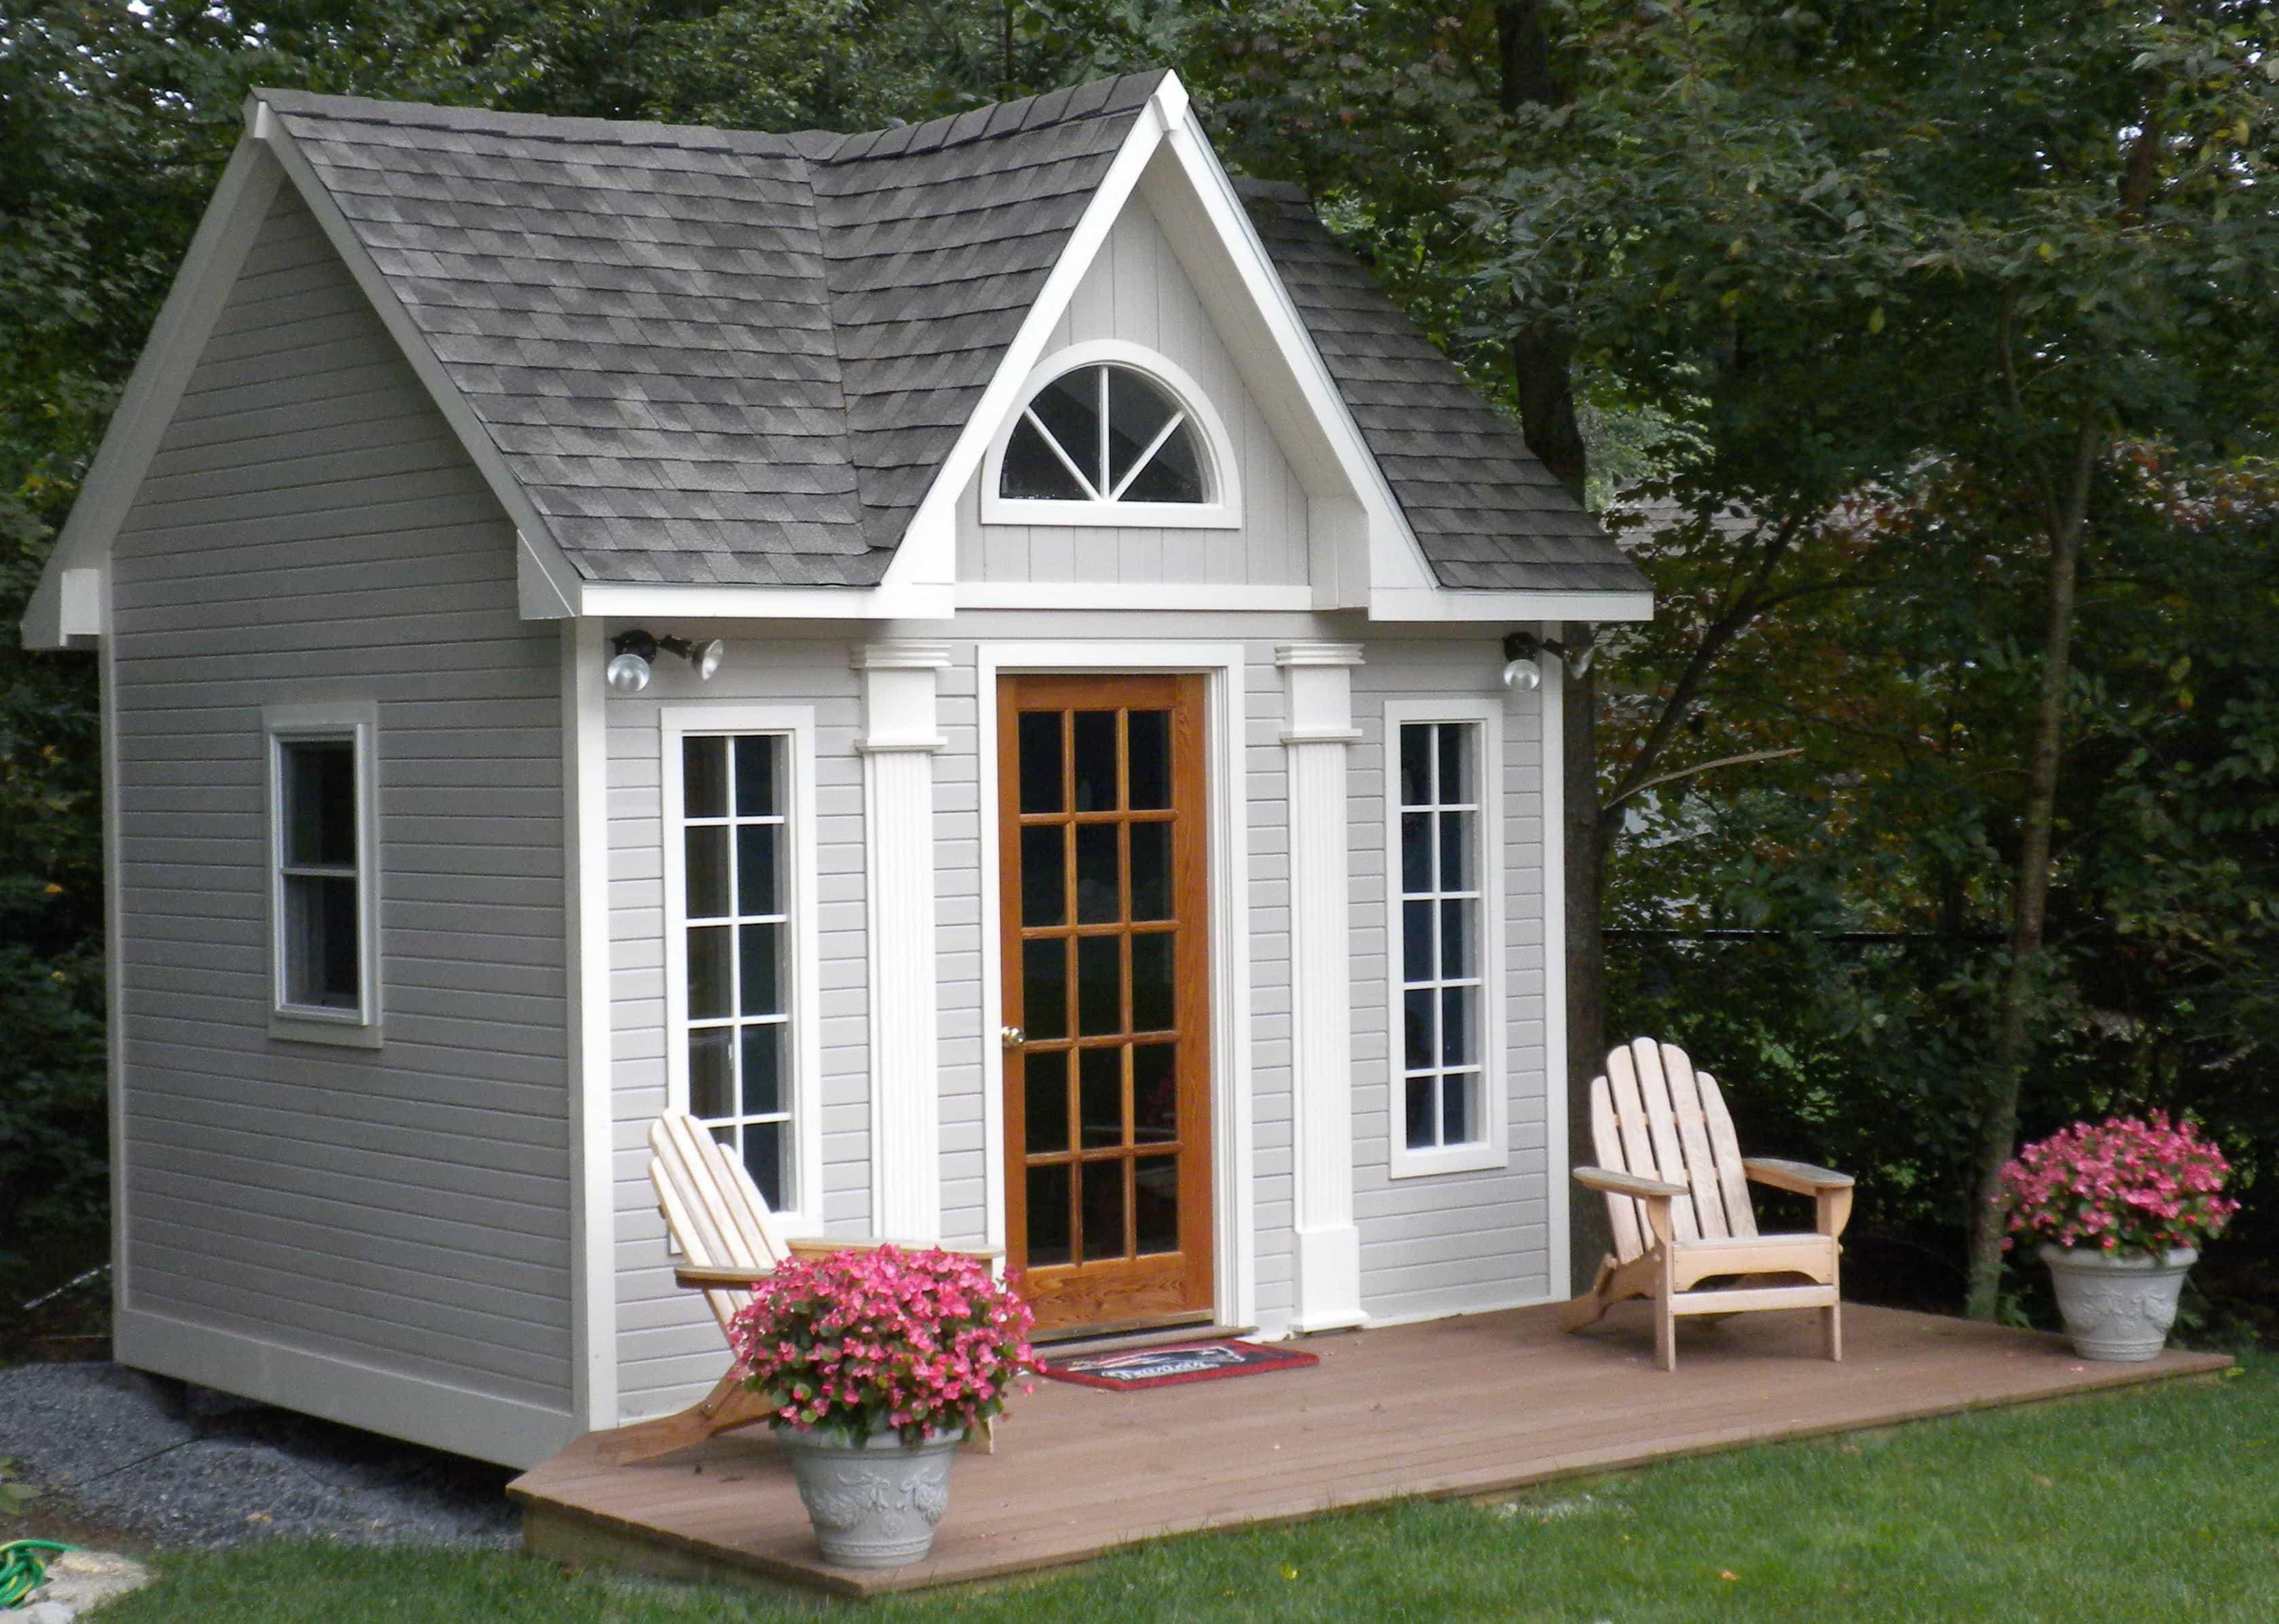 Cedar Copper Creek 10 x 12 garden shed with cedar pilaster in Andover Massachusetts. ID number 90356